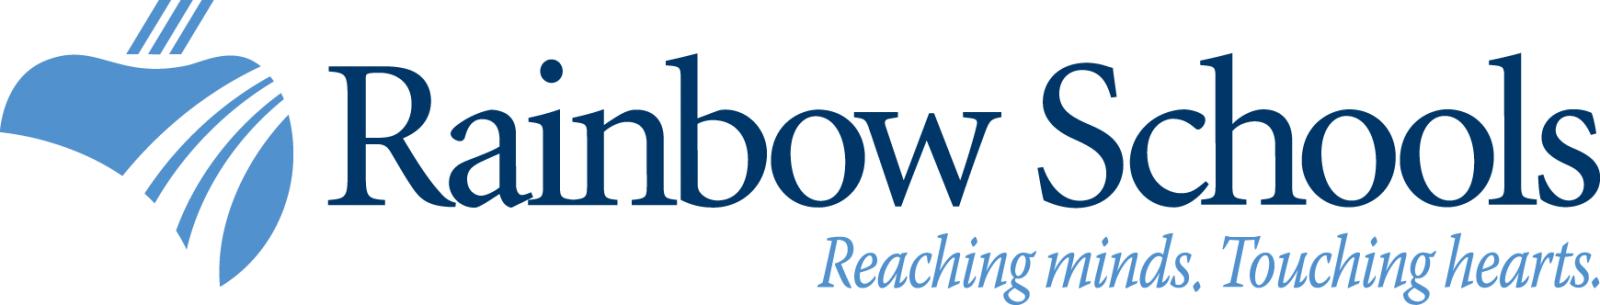 Rainbow School Board logo